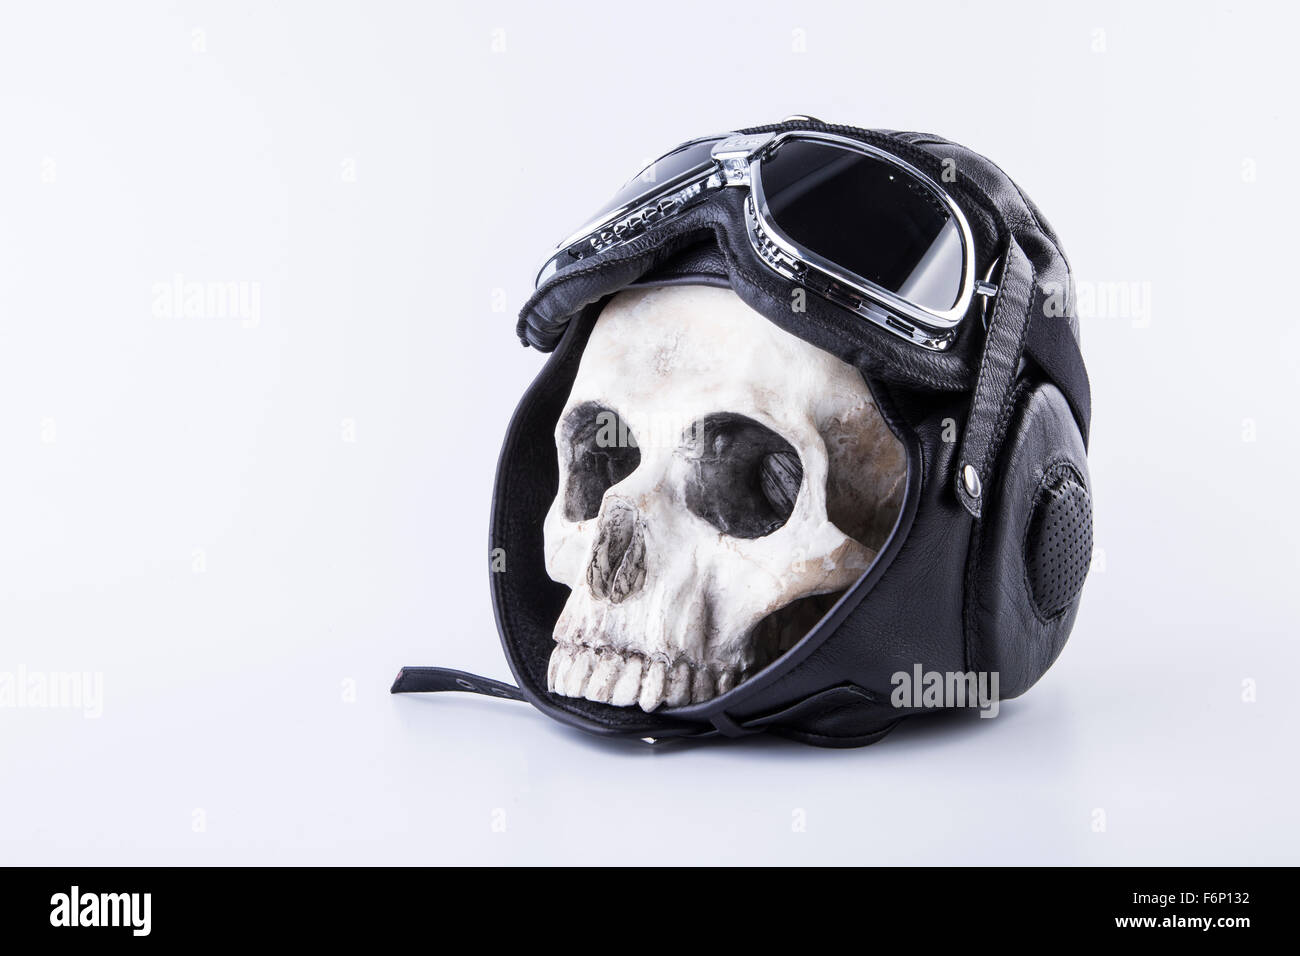 isolated skull and helmet Stock Photo